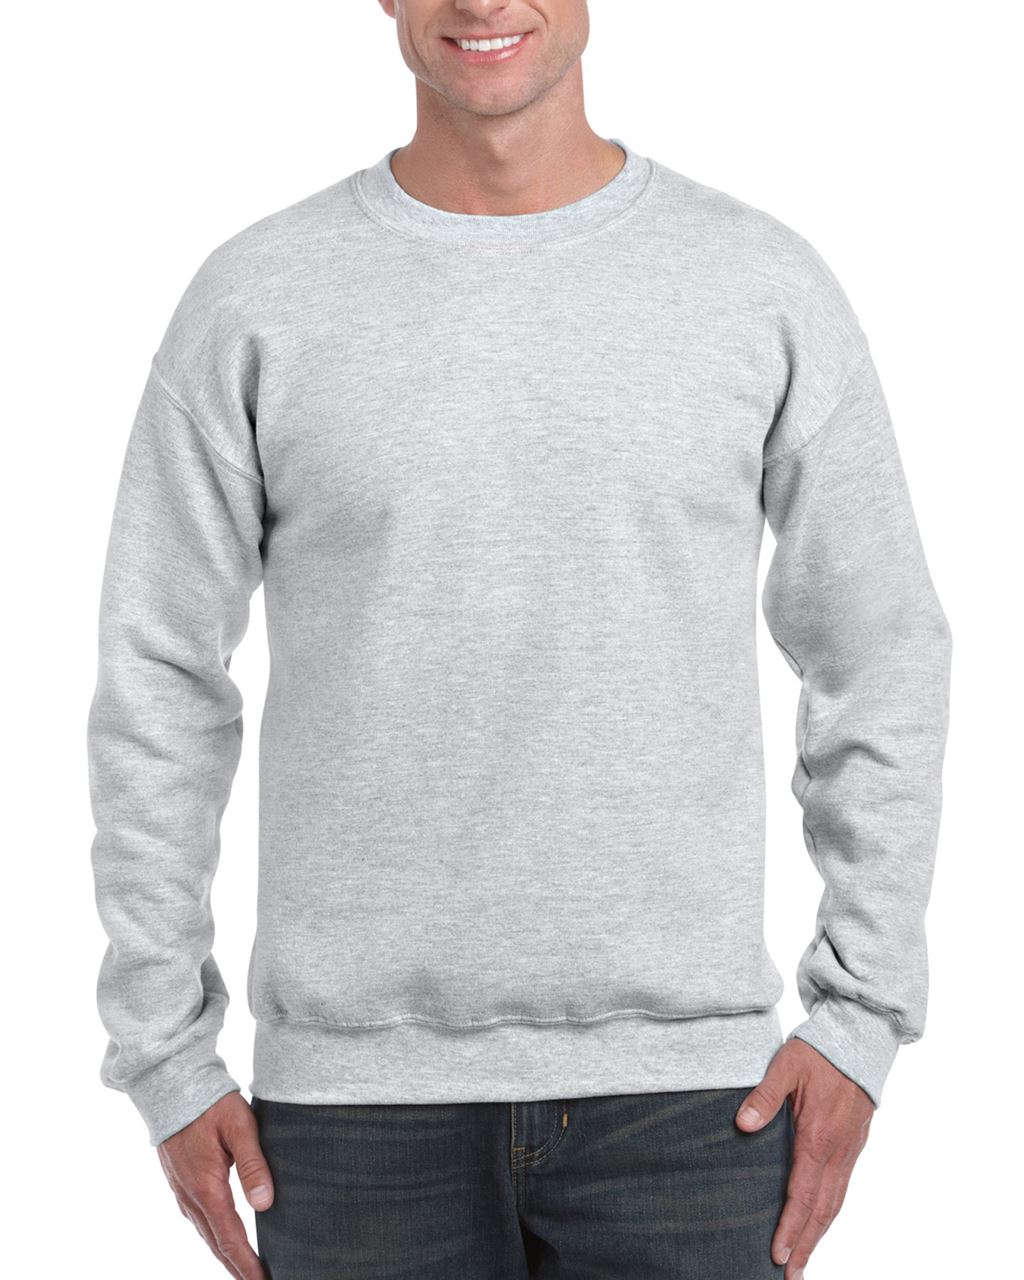 Gildan Dryblend® Adult Crewneck Sweatshirt - grey